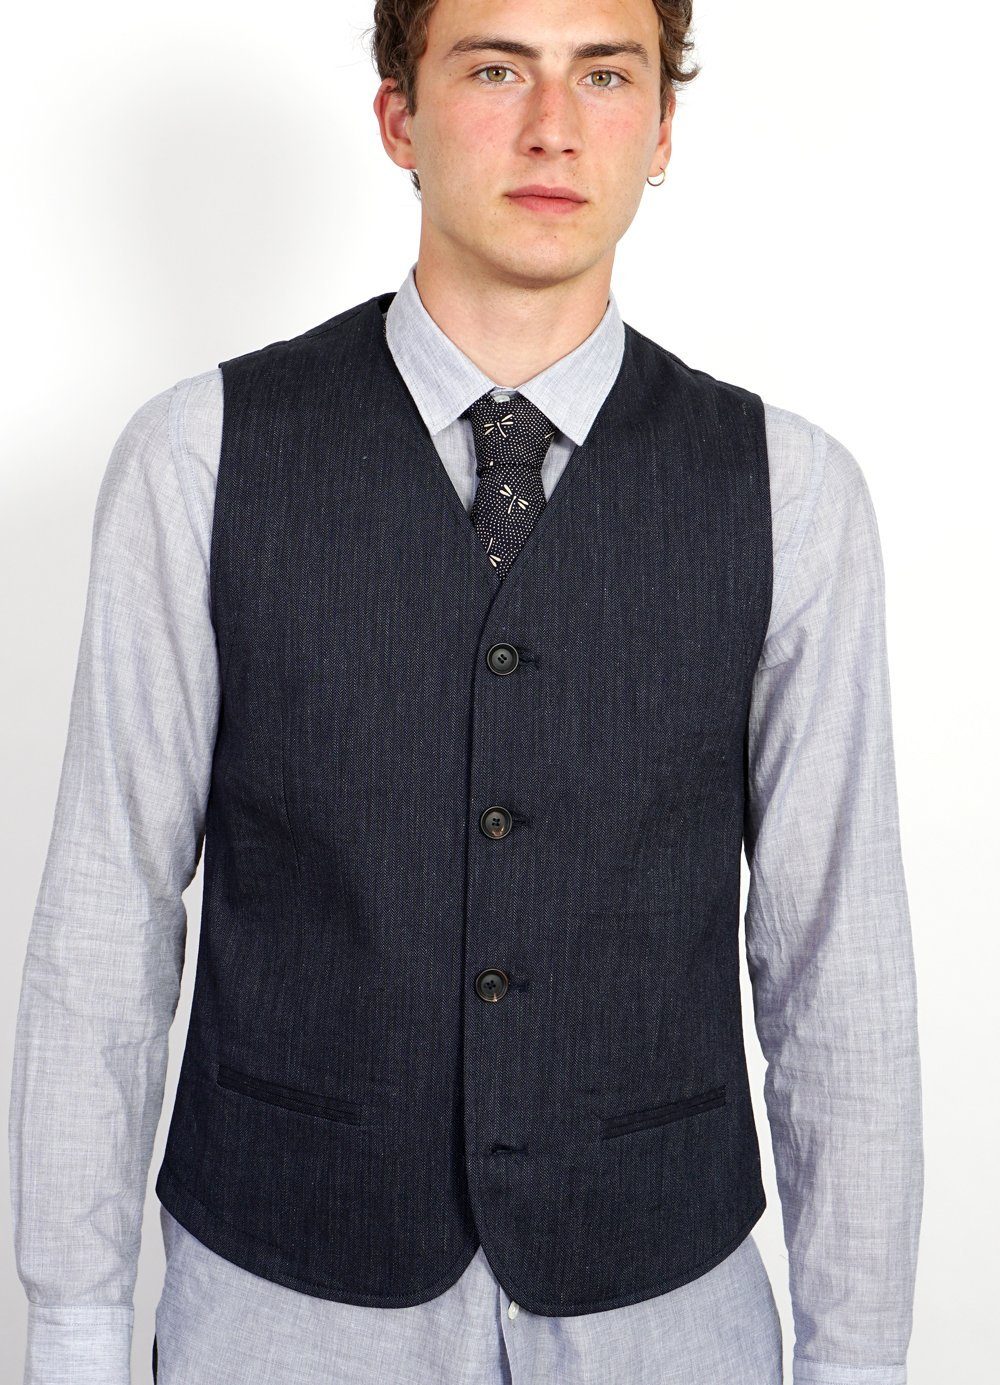 DANIEL | Four Button Waistcoat | Navy Melange -HANSEN Garments- HANSEN Garments